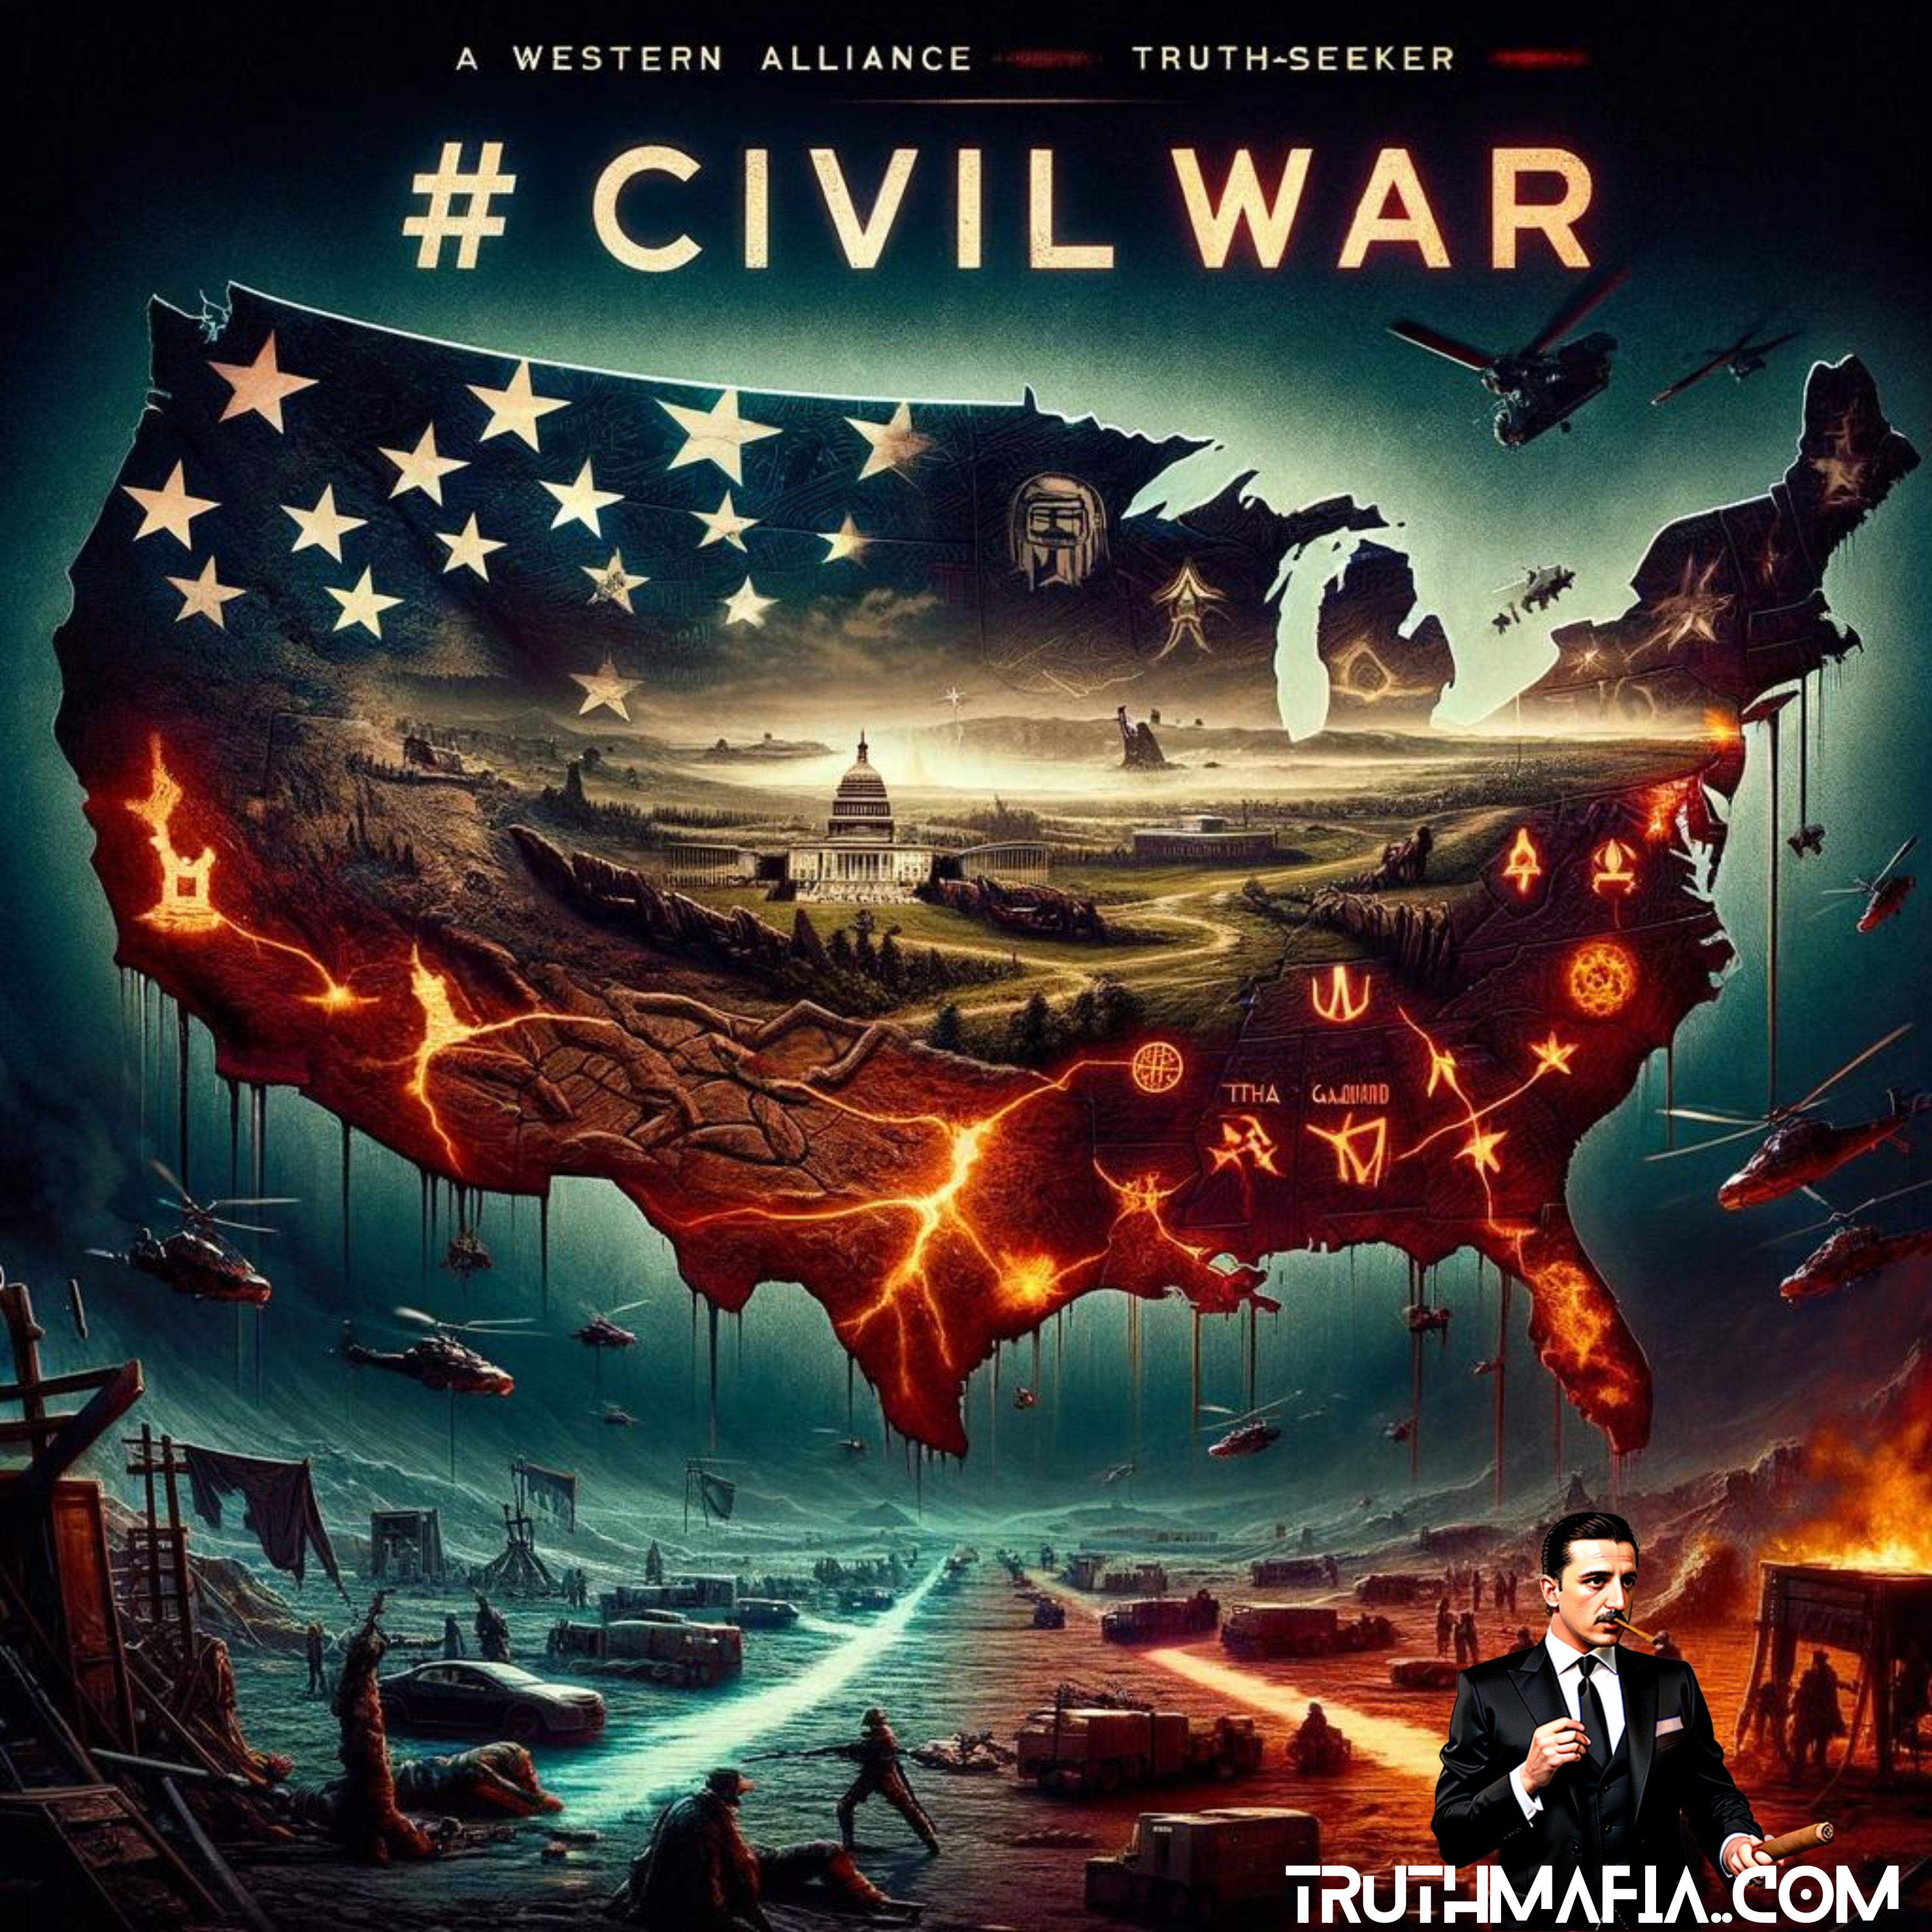 Alex Garland's Civil War